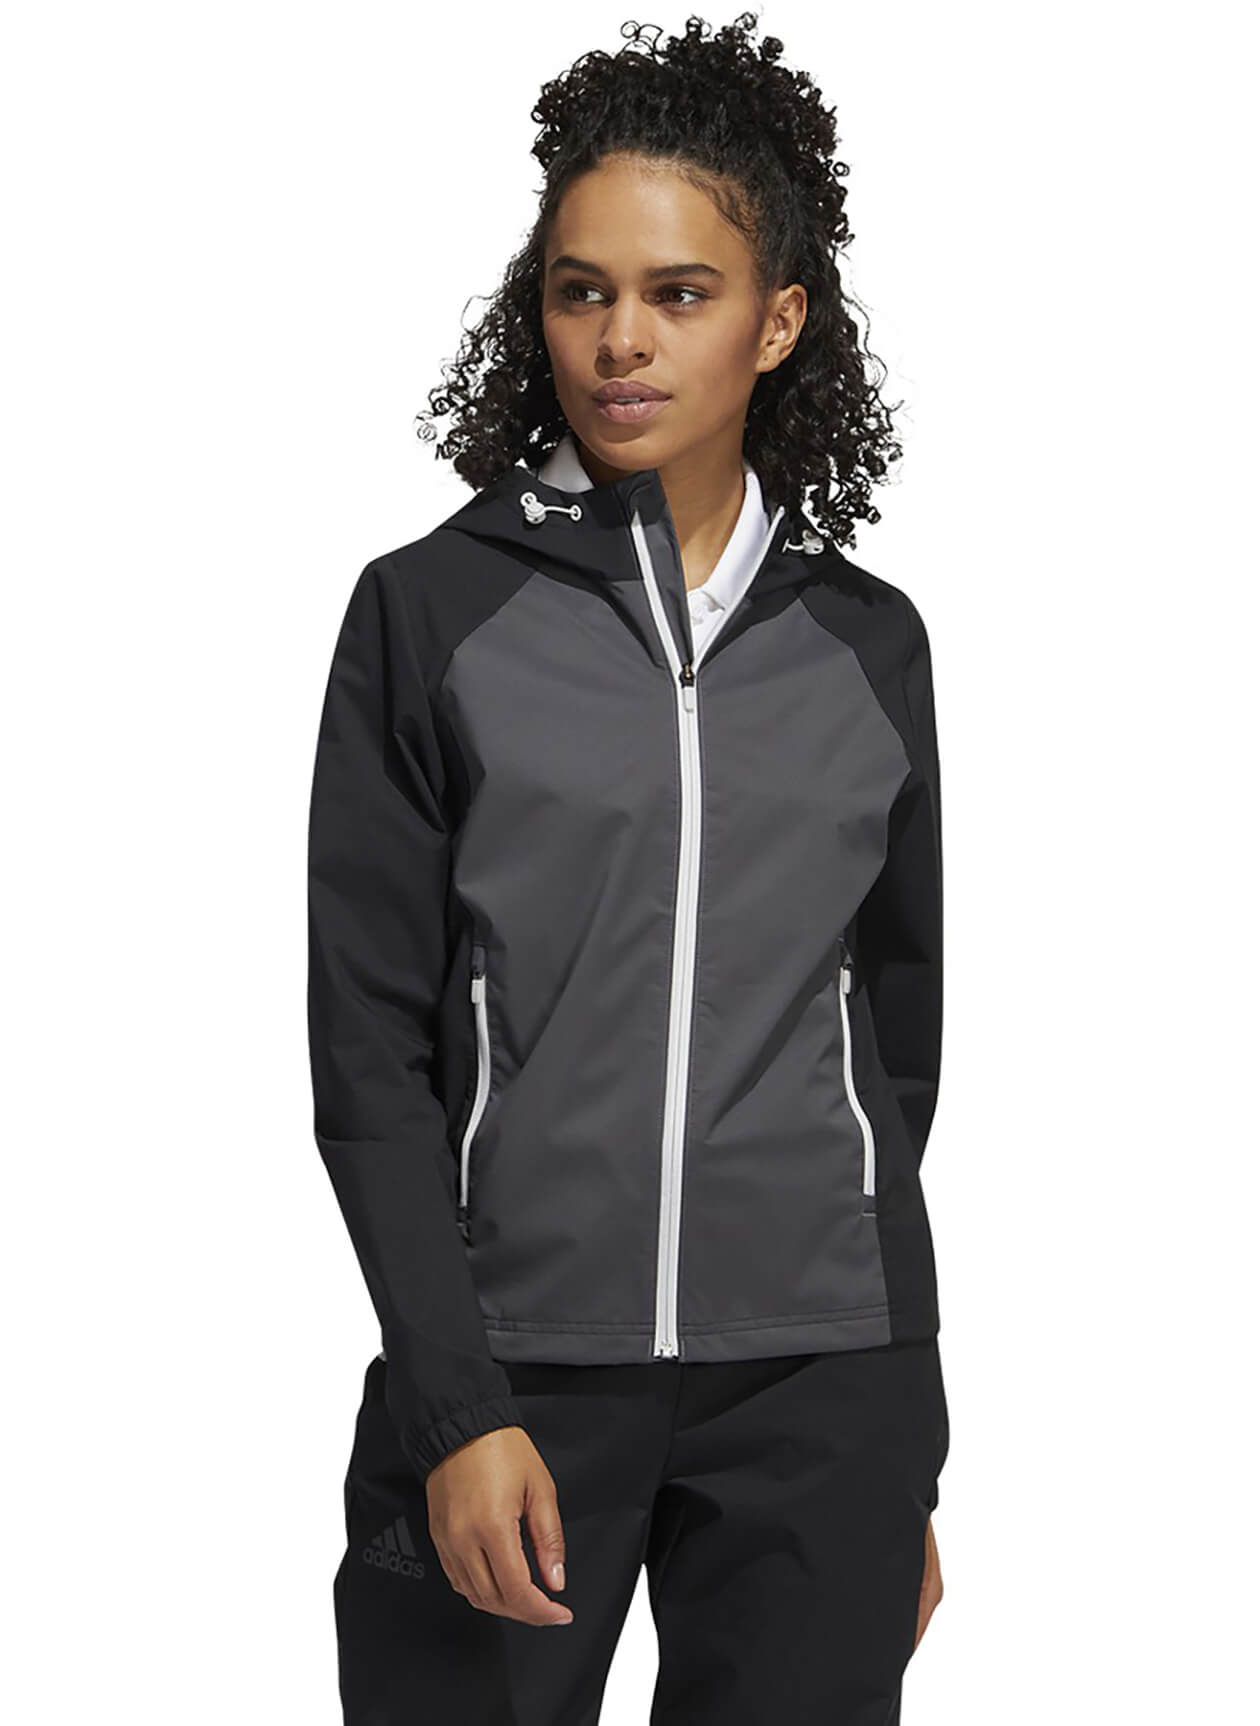 Adidas AD231 - Golf Women's Provisional Jacket